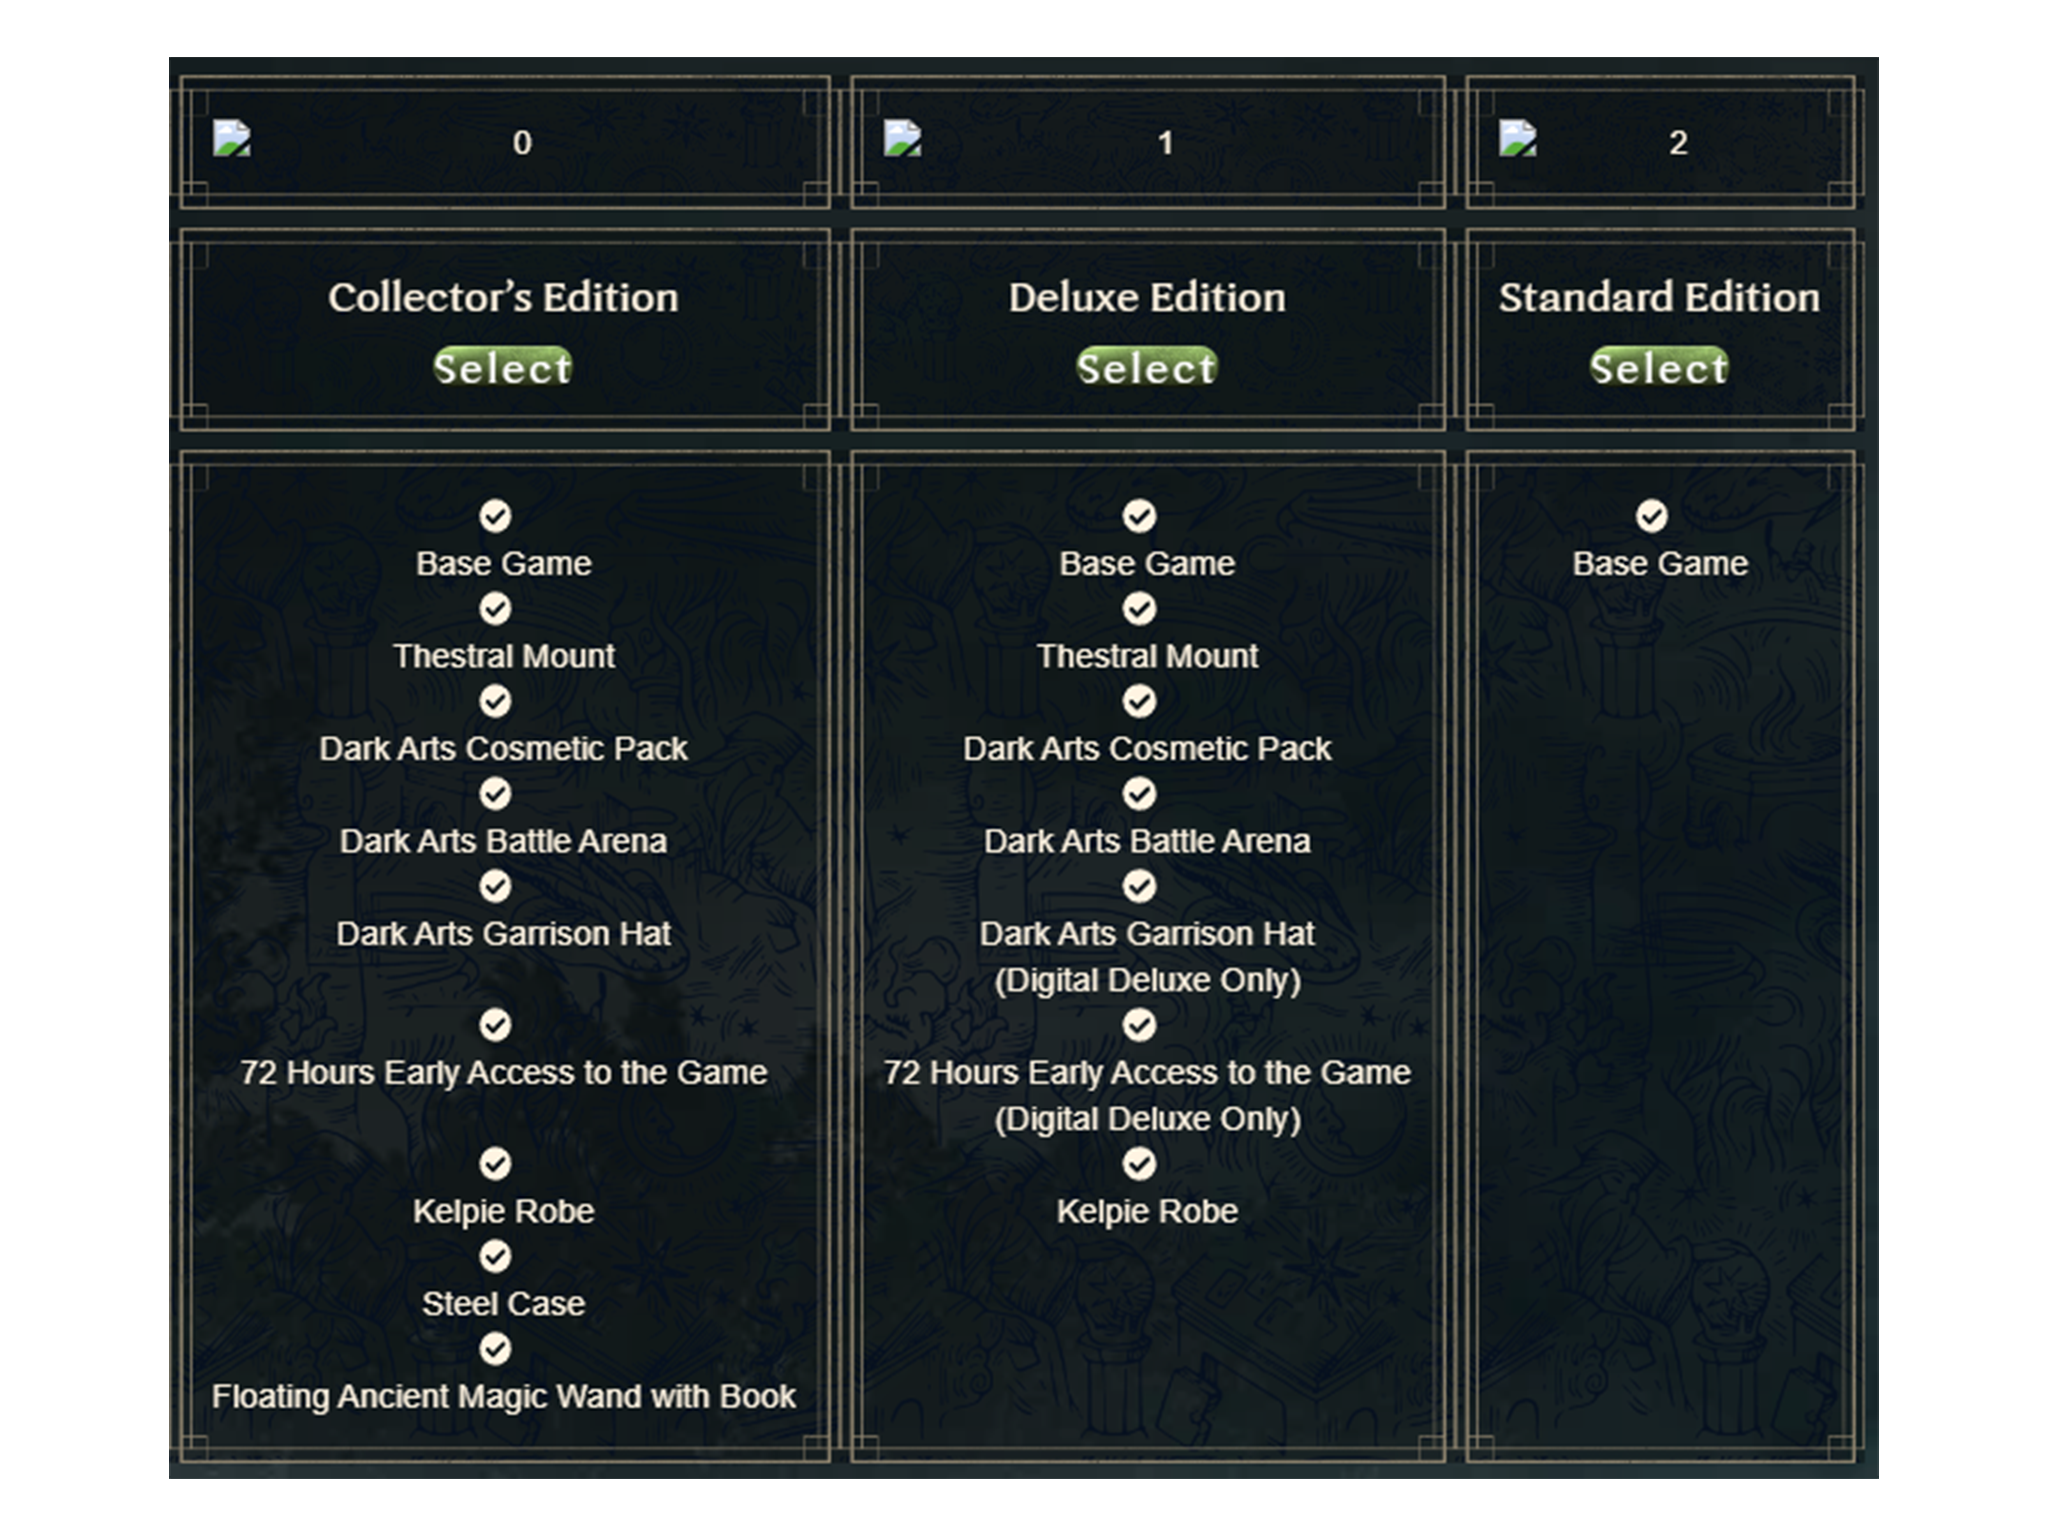 God of War Ragnarok Collector's Edition Contents Leak Online